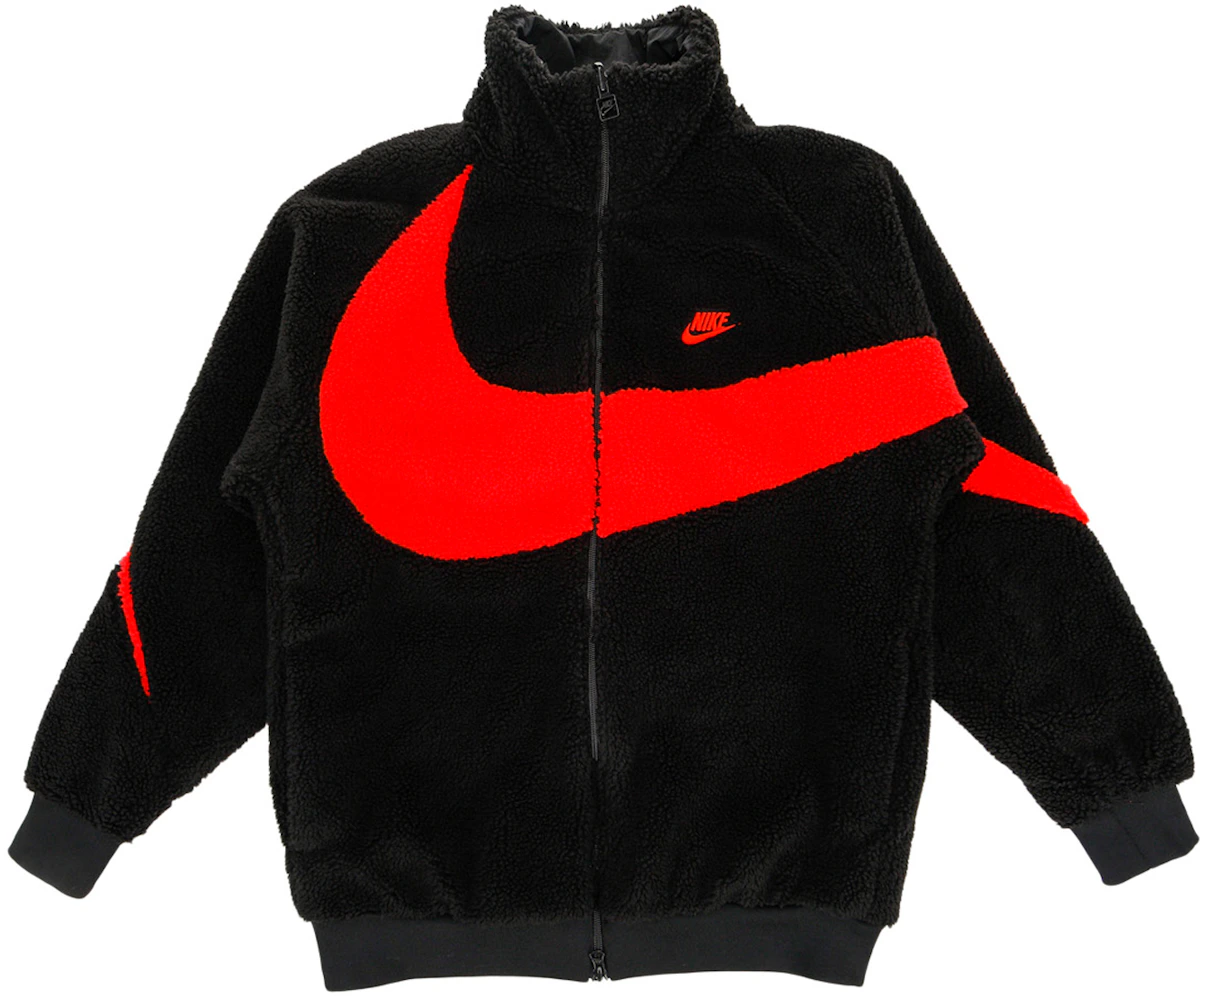 Zeemeeuw Fahrenheit plak Nike Big Swoosh Reversible Boa Jacket (Asia Sizing) Black Chili Red - FW21  Men's - US